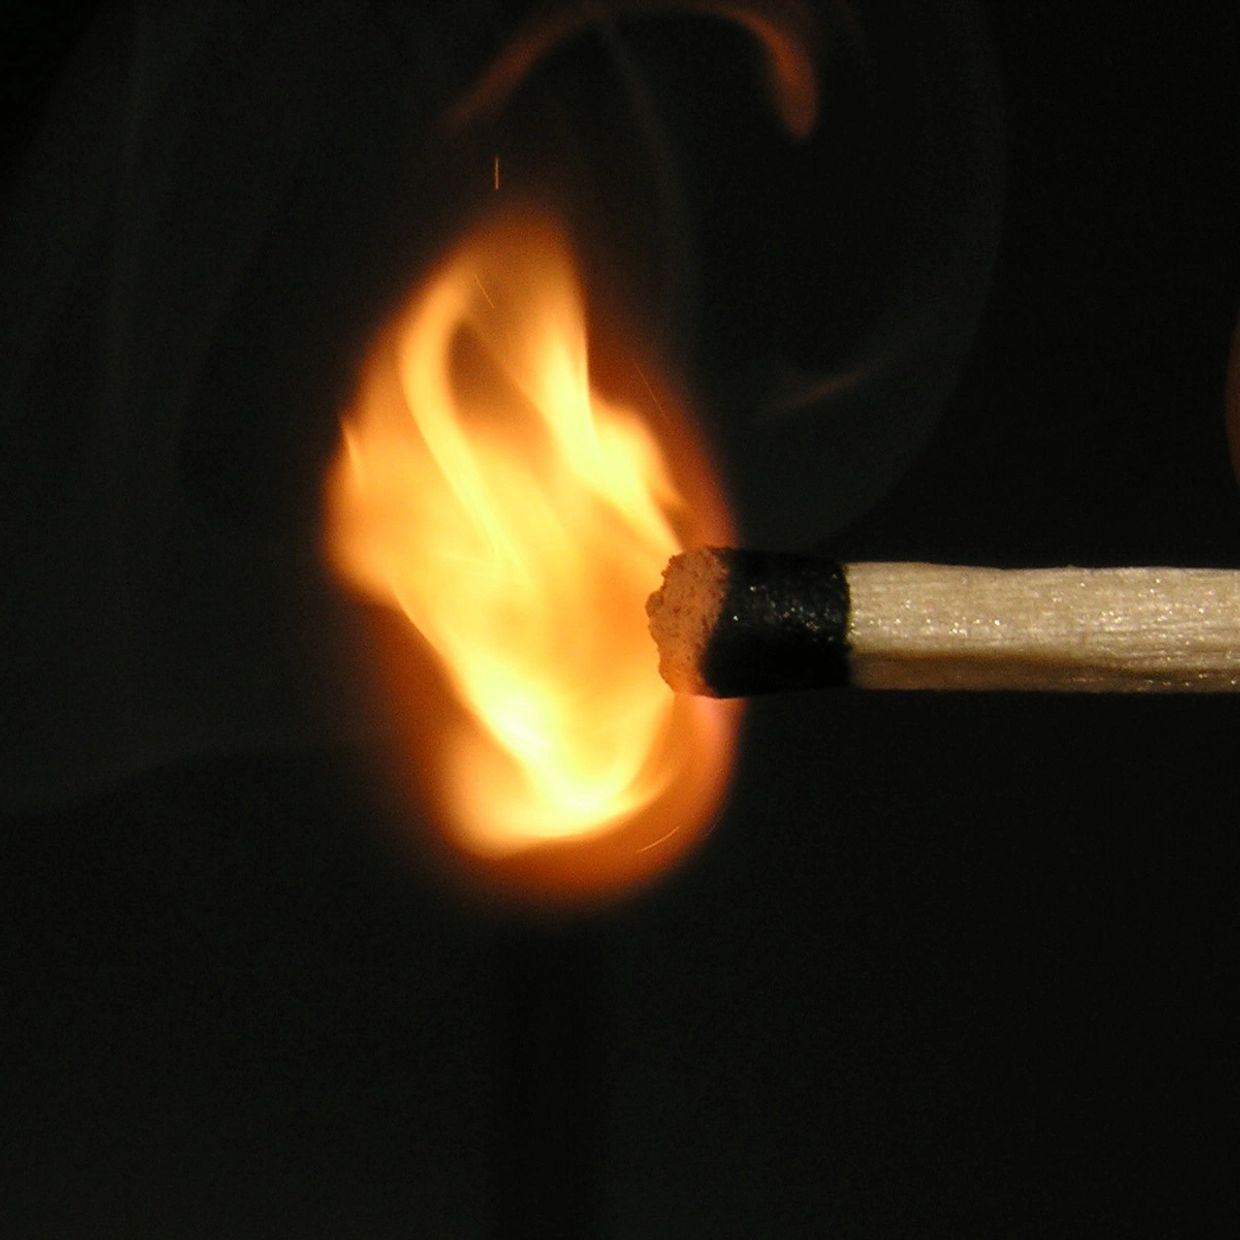 Pyromania: A compulsion to set fires.